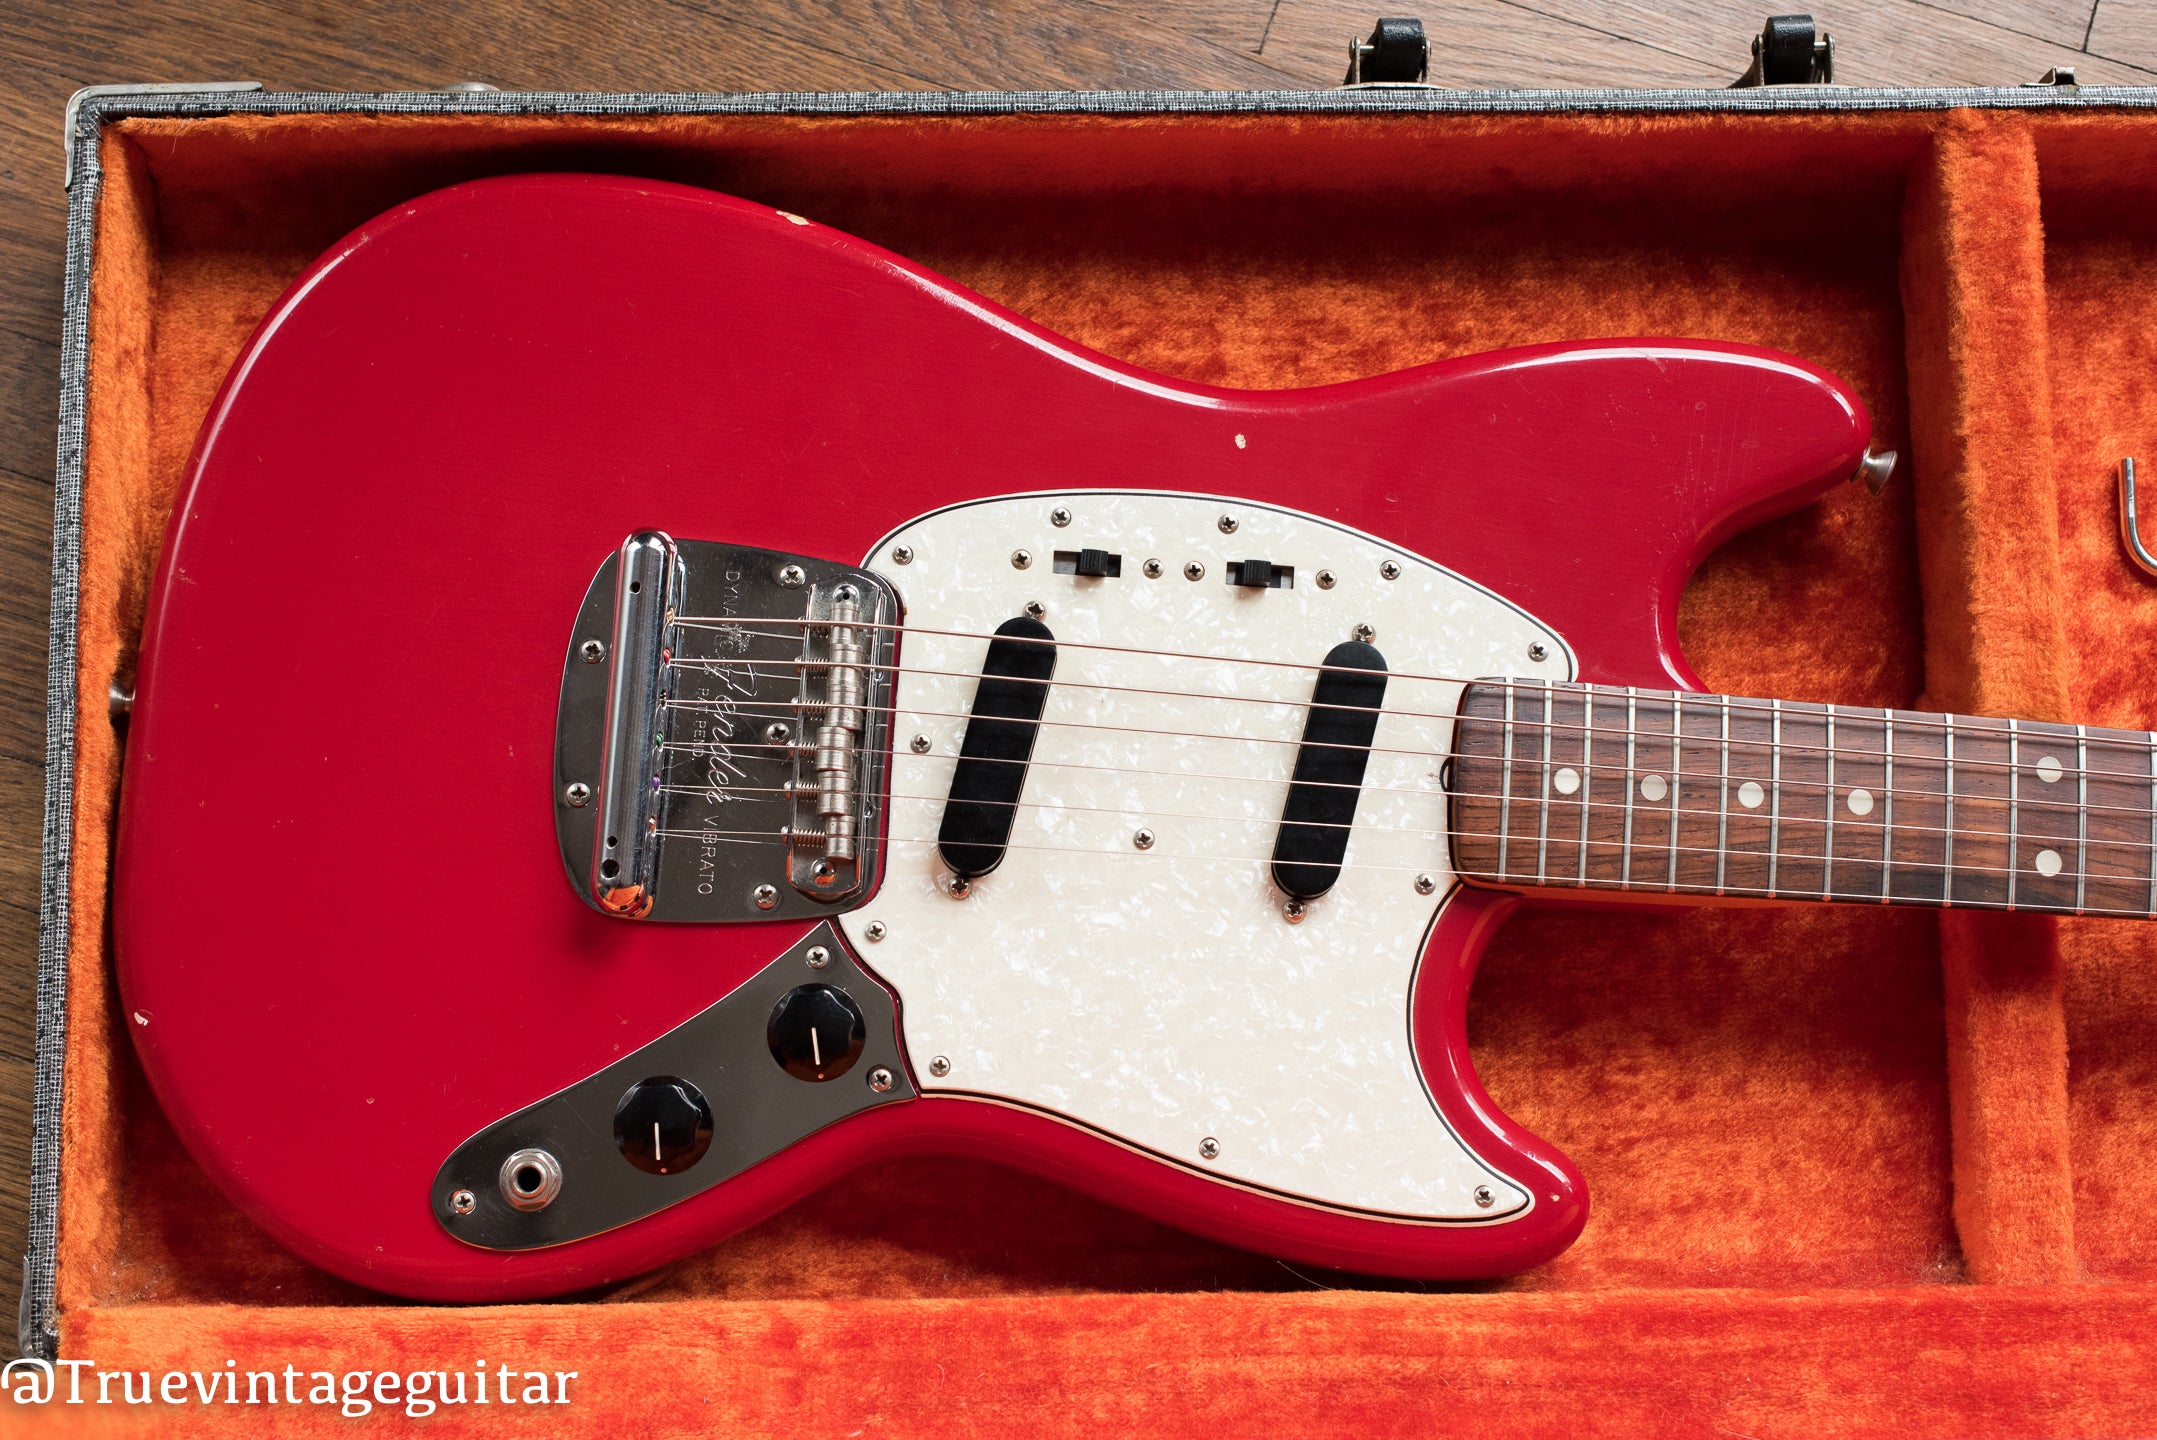 1965 Fender Mustang Red electric guitar